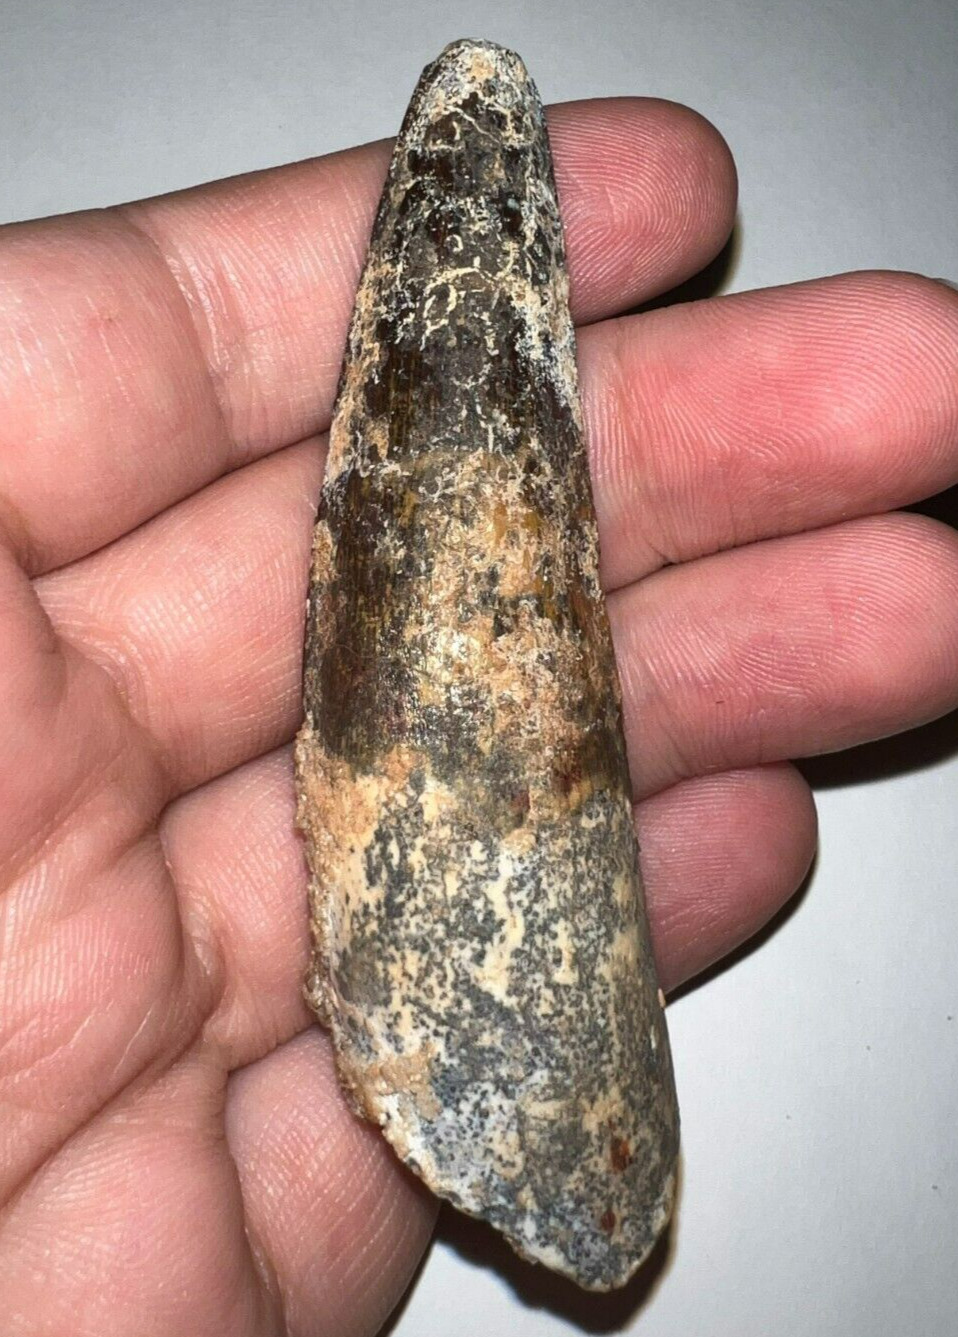 HUGE SPINOSAURUS SPINOSAUR Fossil Dinosaur Tooth 3.226 INCHES NO REPAIR